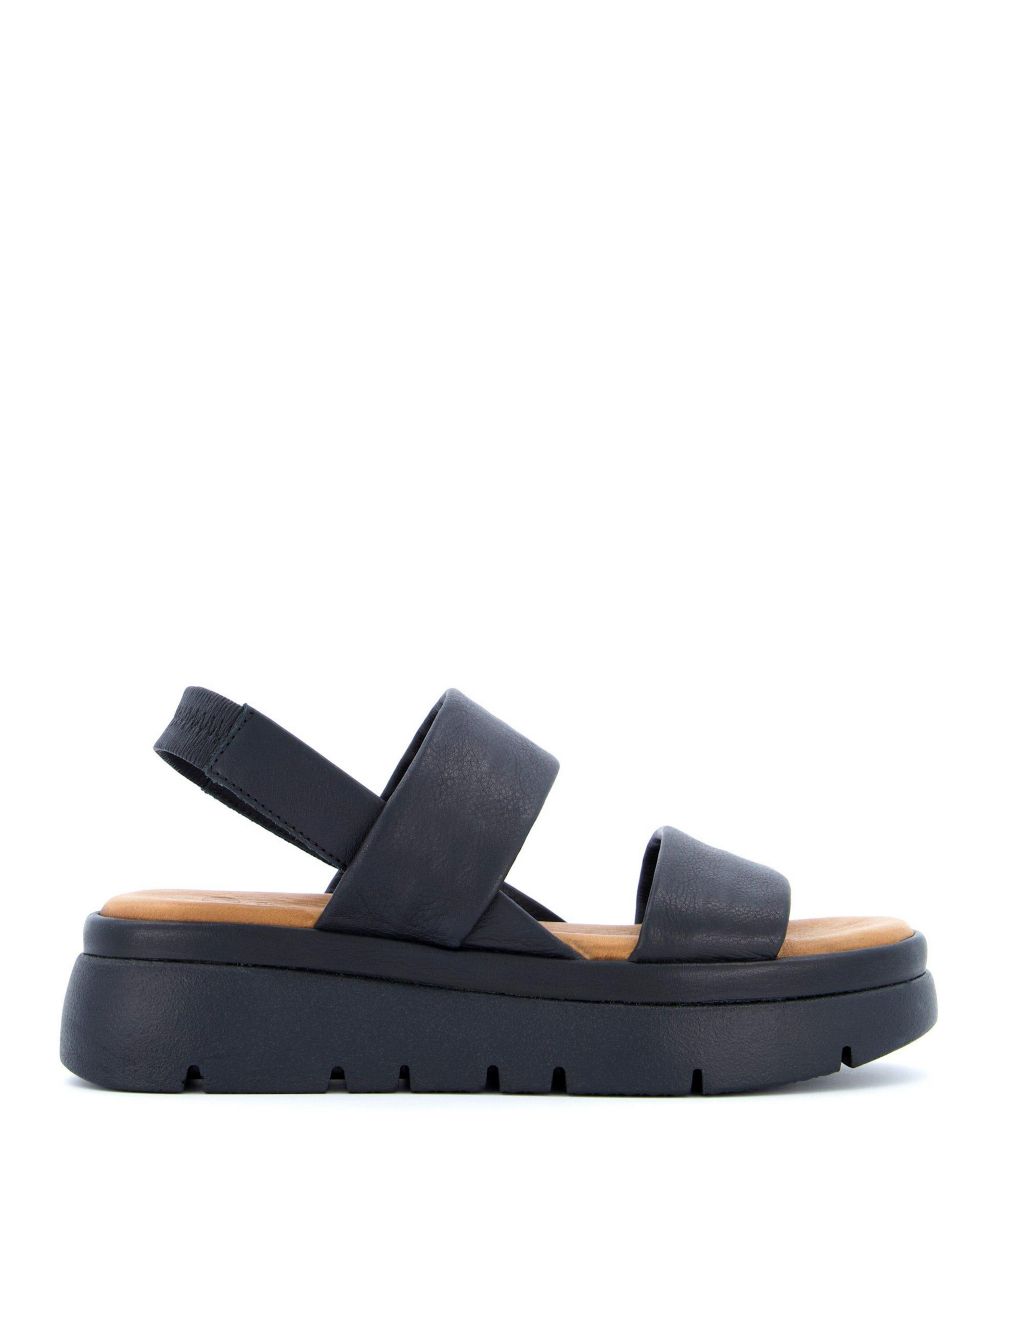 Buy Leather Slip On Flatform Sandals | Dune London | M&S